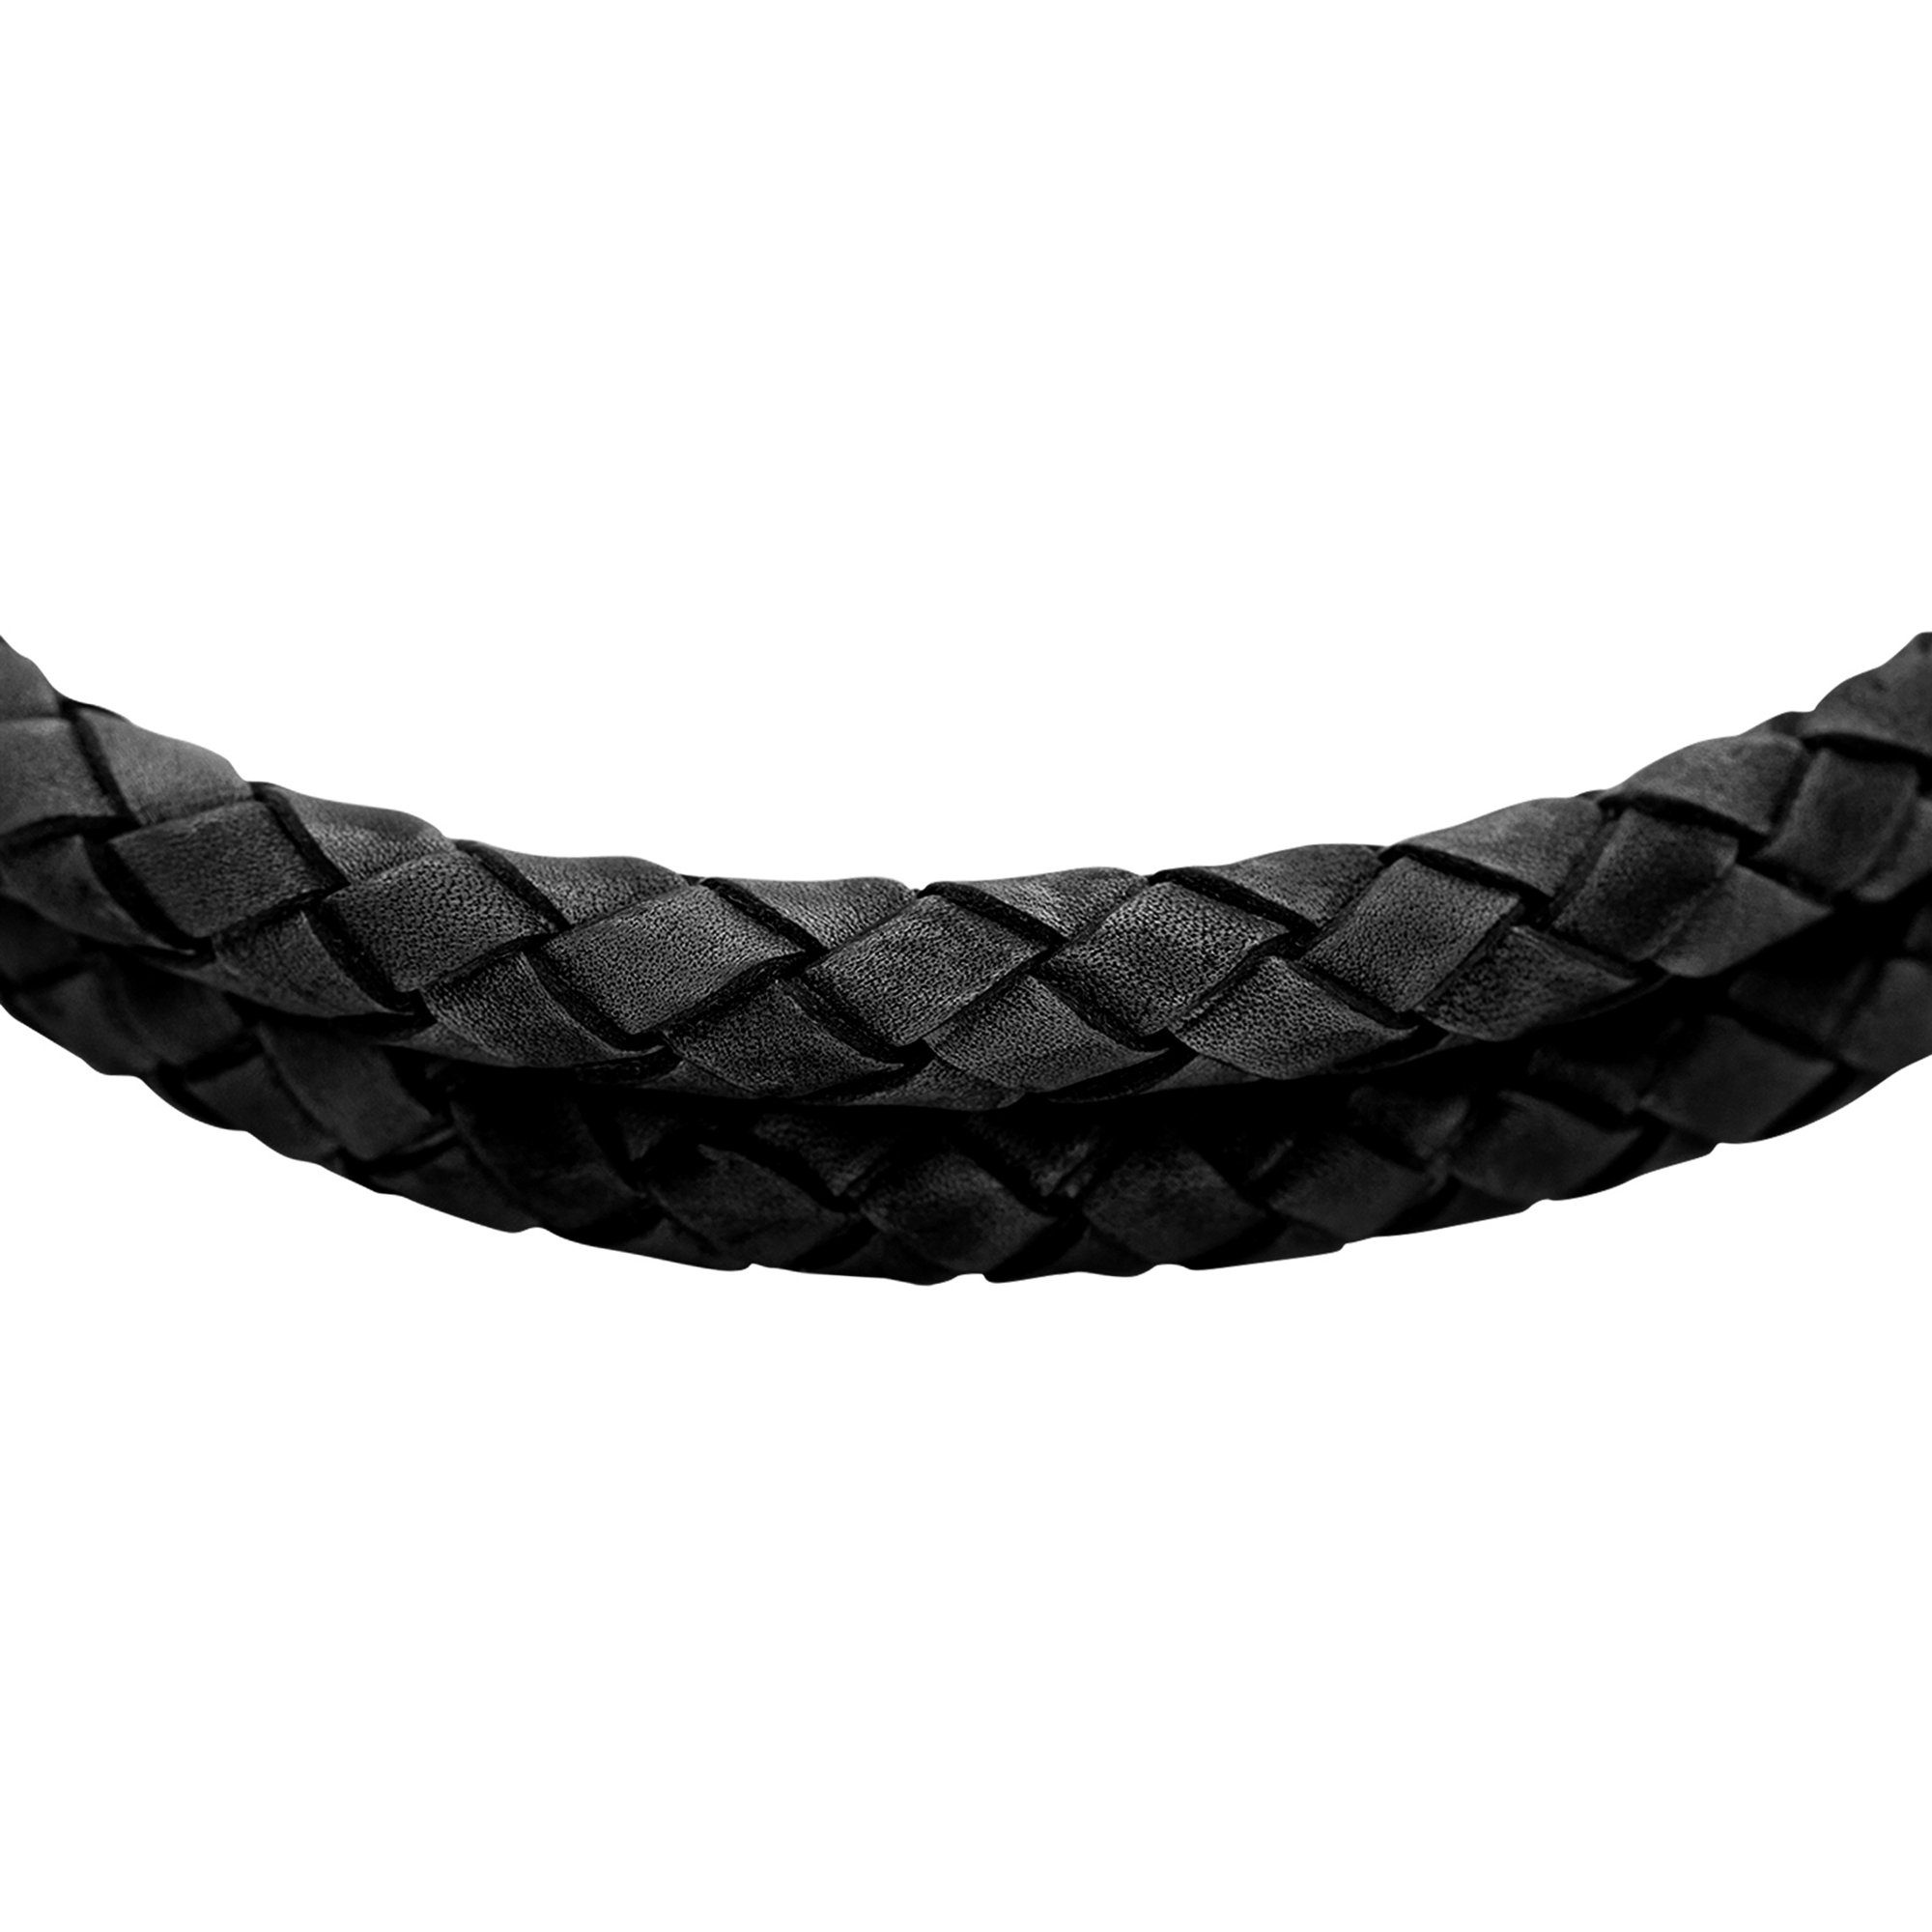 Heideman Männerlederarmband inkl. Männerarmband, schwarz Geschenkverpackung), Hanno (Armband, Lederarmband Echtlederarmband, Armband